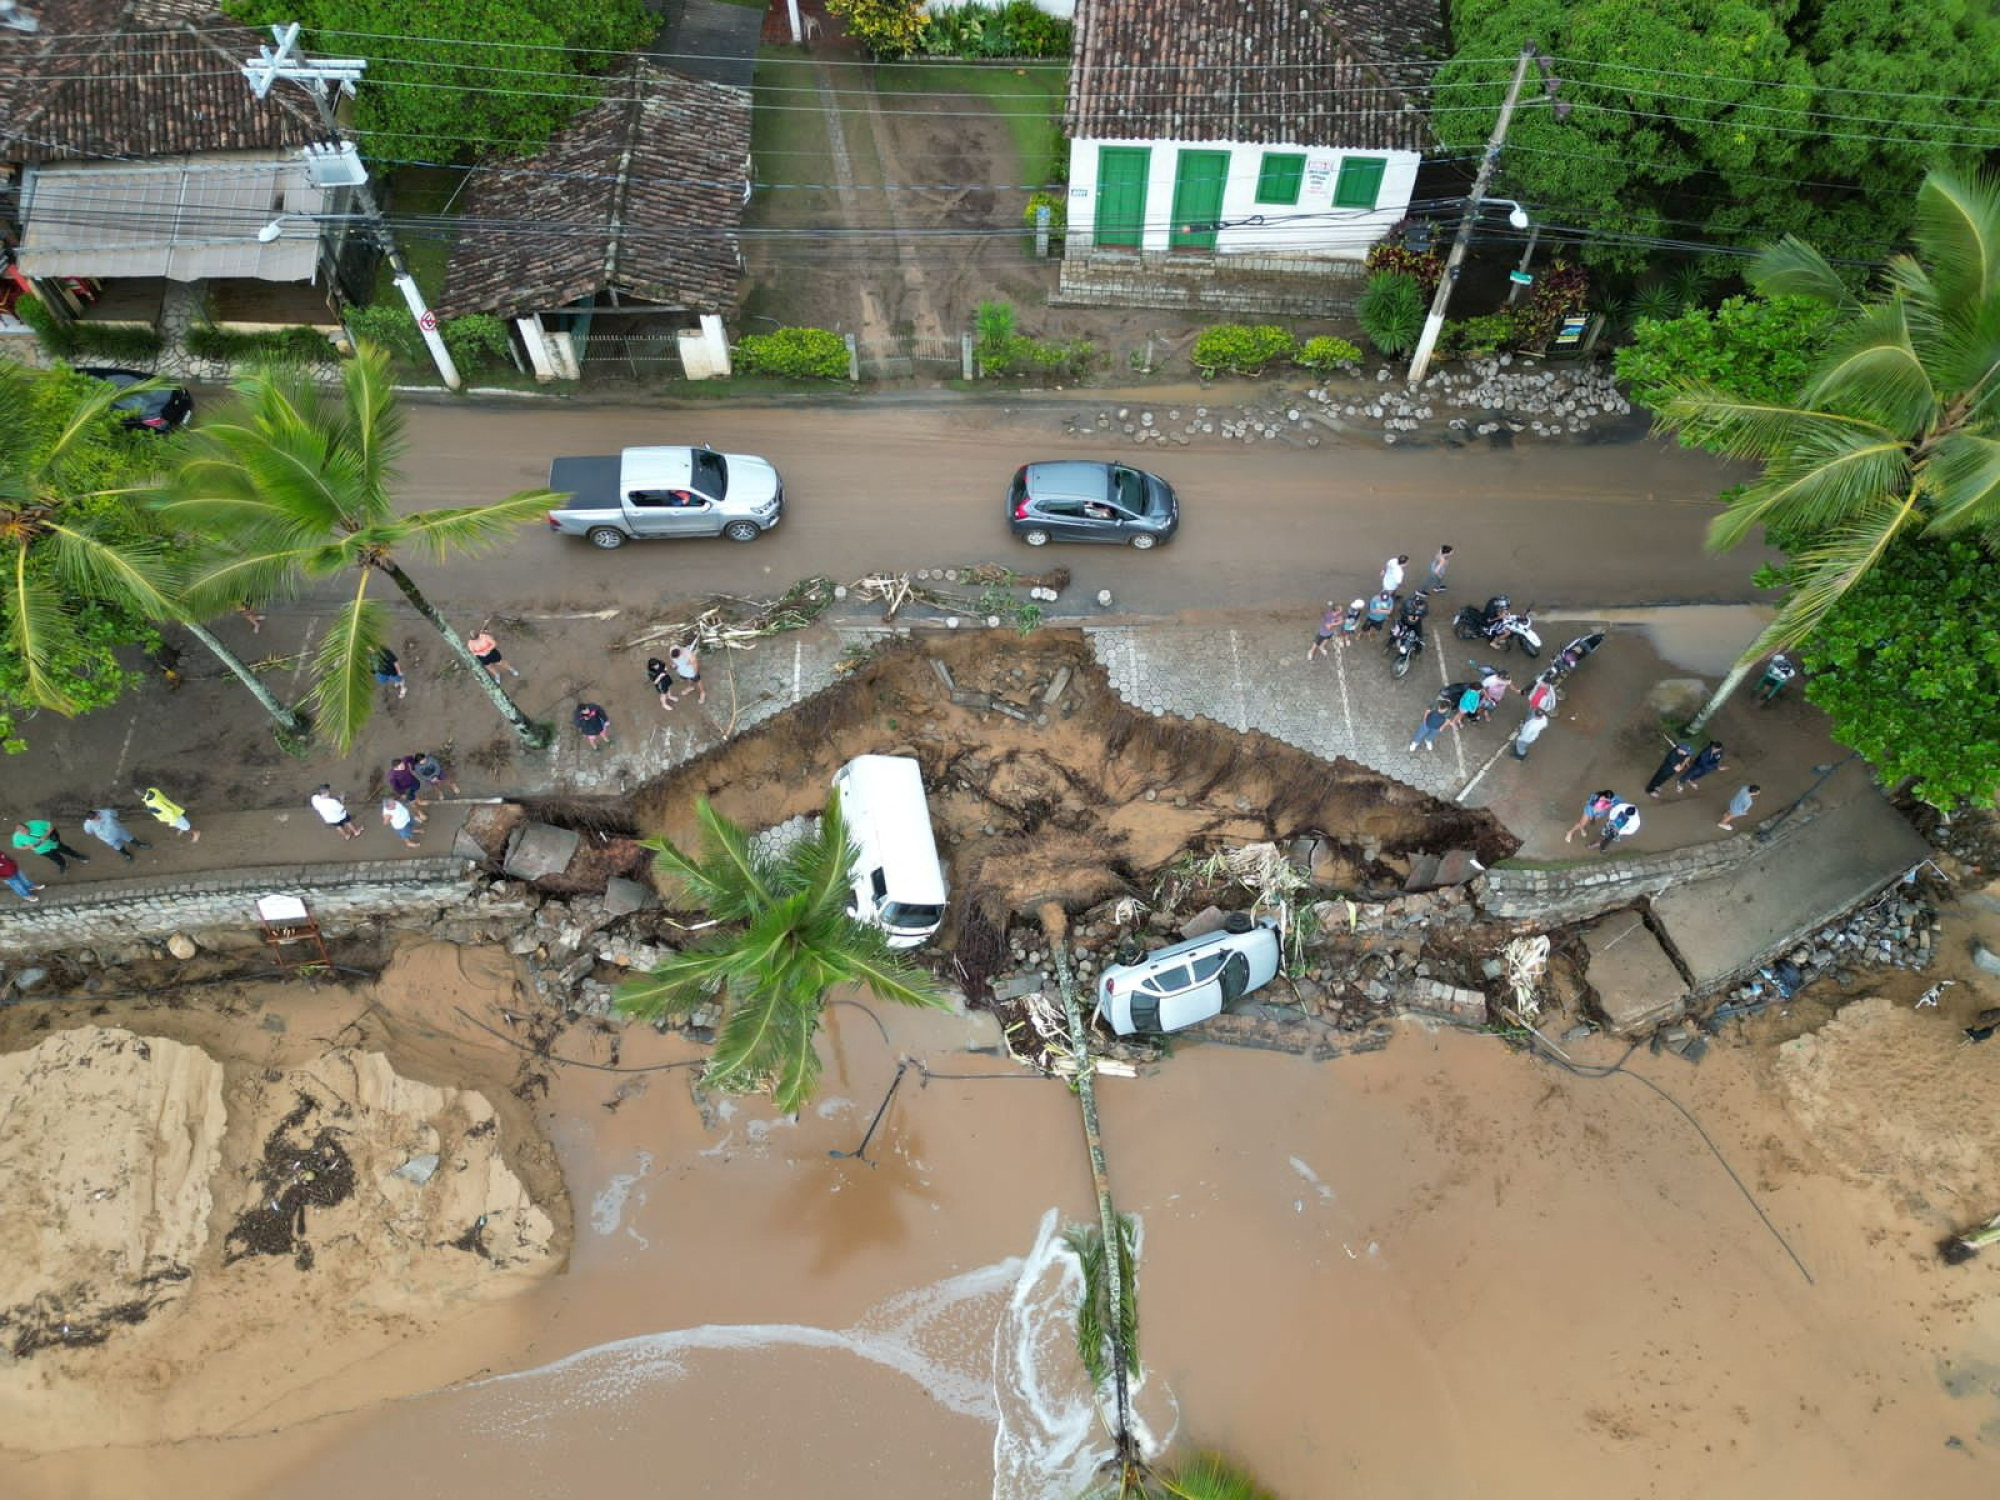 Floods, landslides kill dozens in Brazil's Sao Paulo state